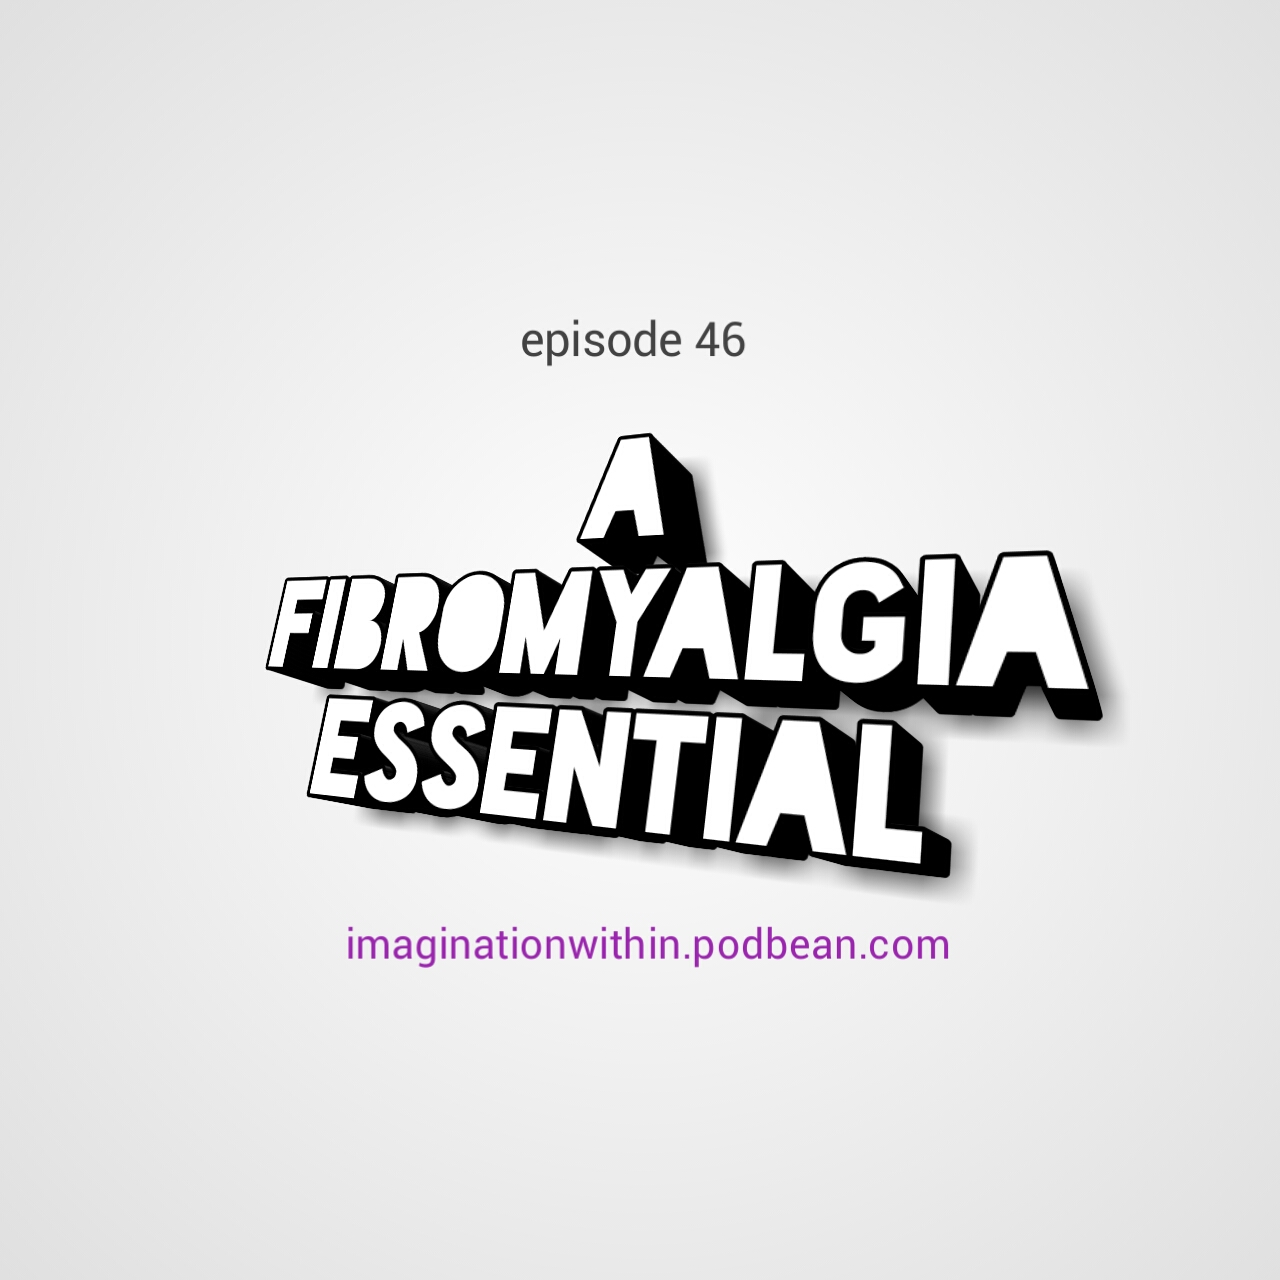 Episode 46 A fibromyalgia essential